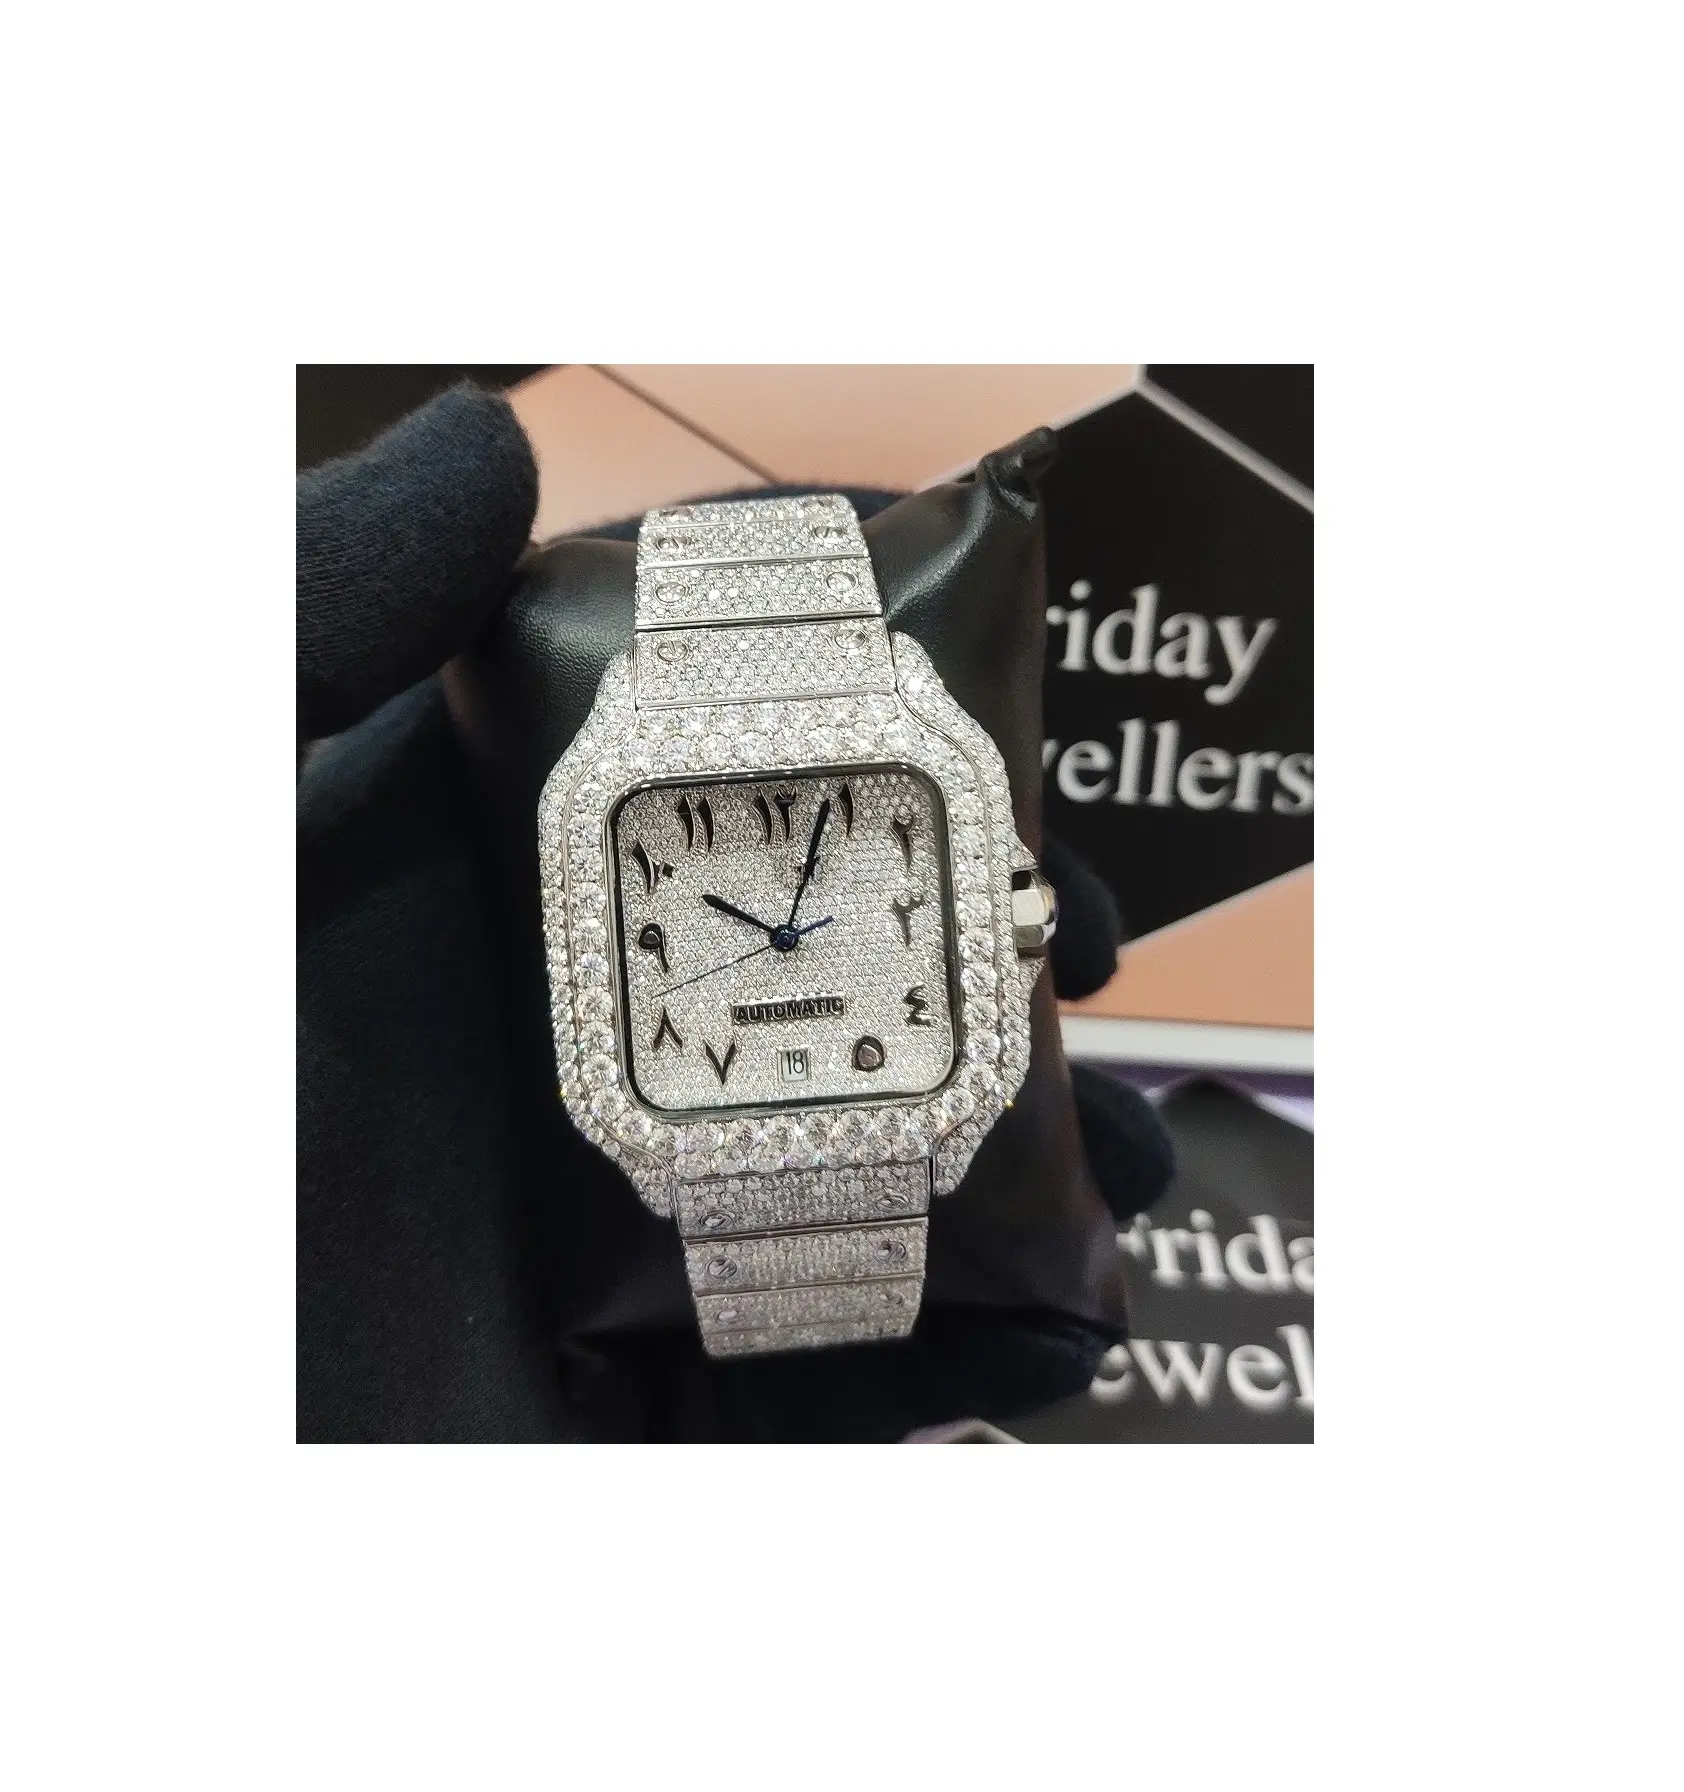 40MM jam tangan berlian desain trendi Tinggi sesuai permintaan untuk uniseks dari produsen India tersedia dengan harga grosir